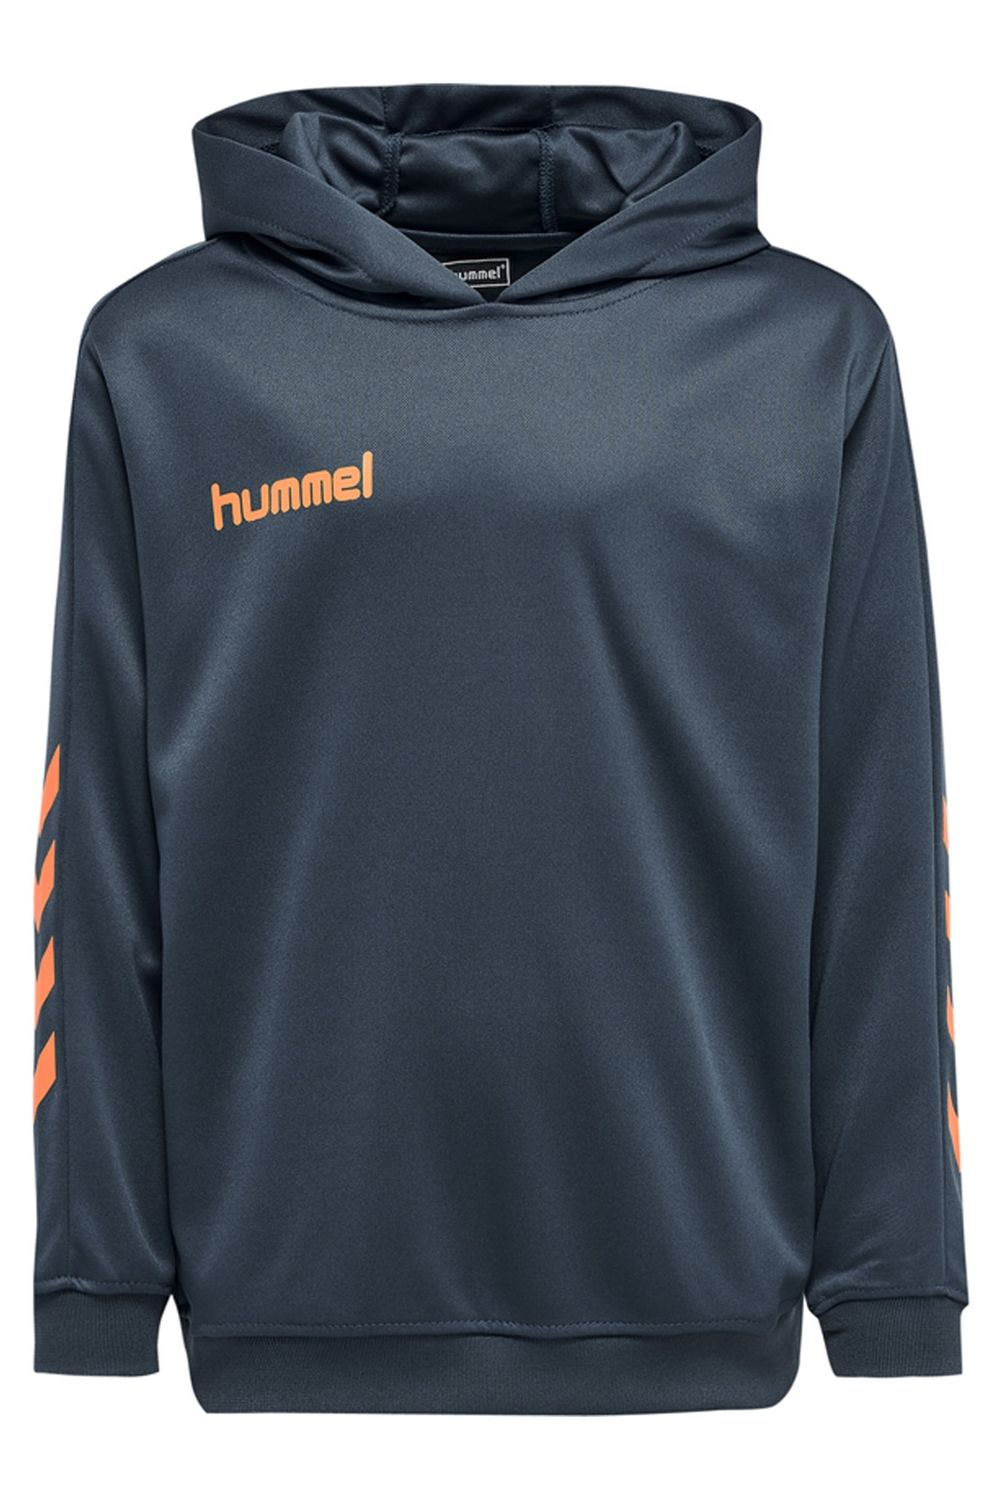 HUMMEL - Regular - - Fit Trendyol Sweatshirt Rot